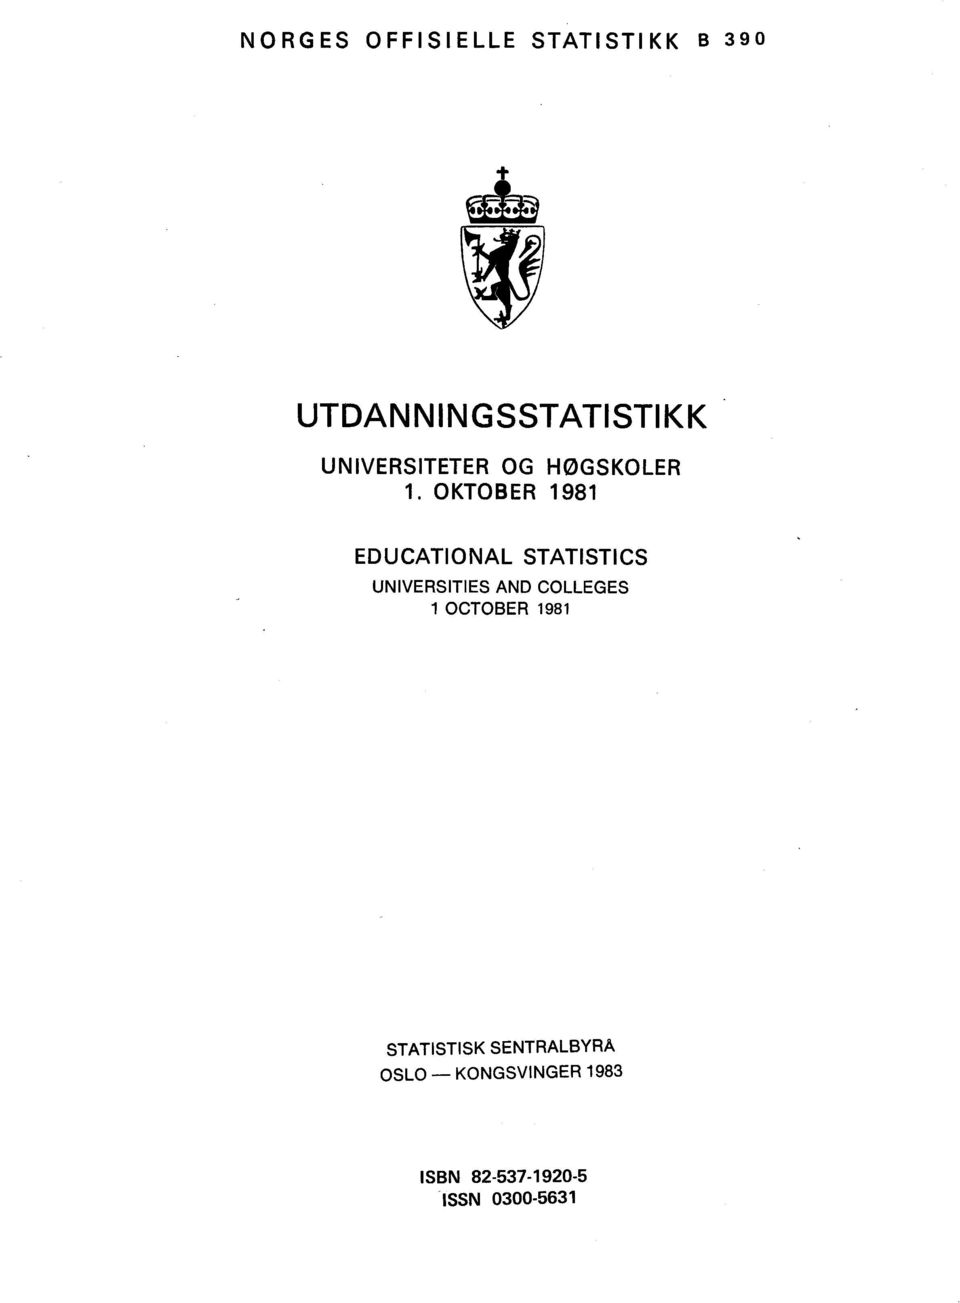 OKTOBER 1981 EDUCATIONAL STATISTICS UNIVERSITIES AND